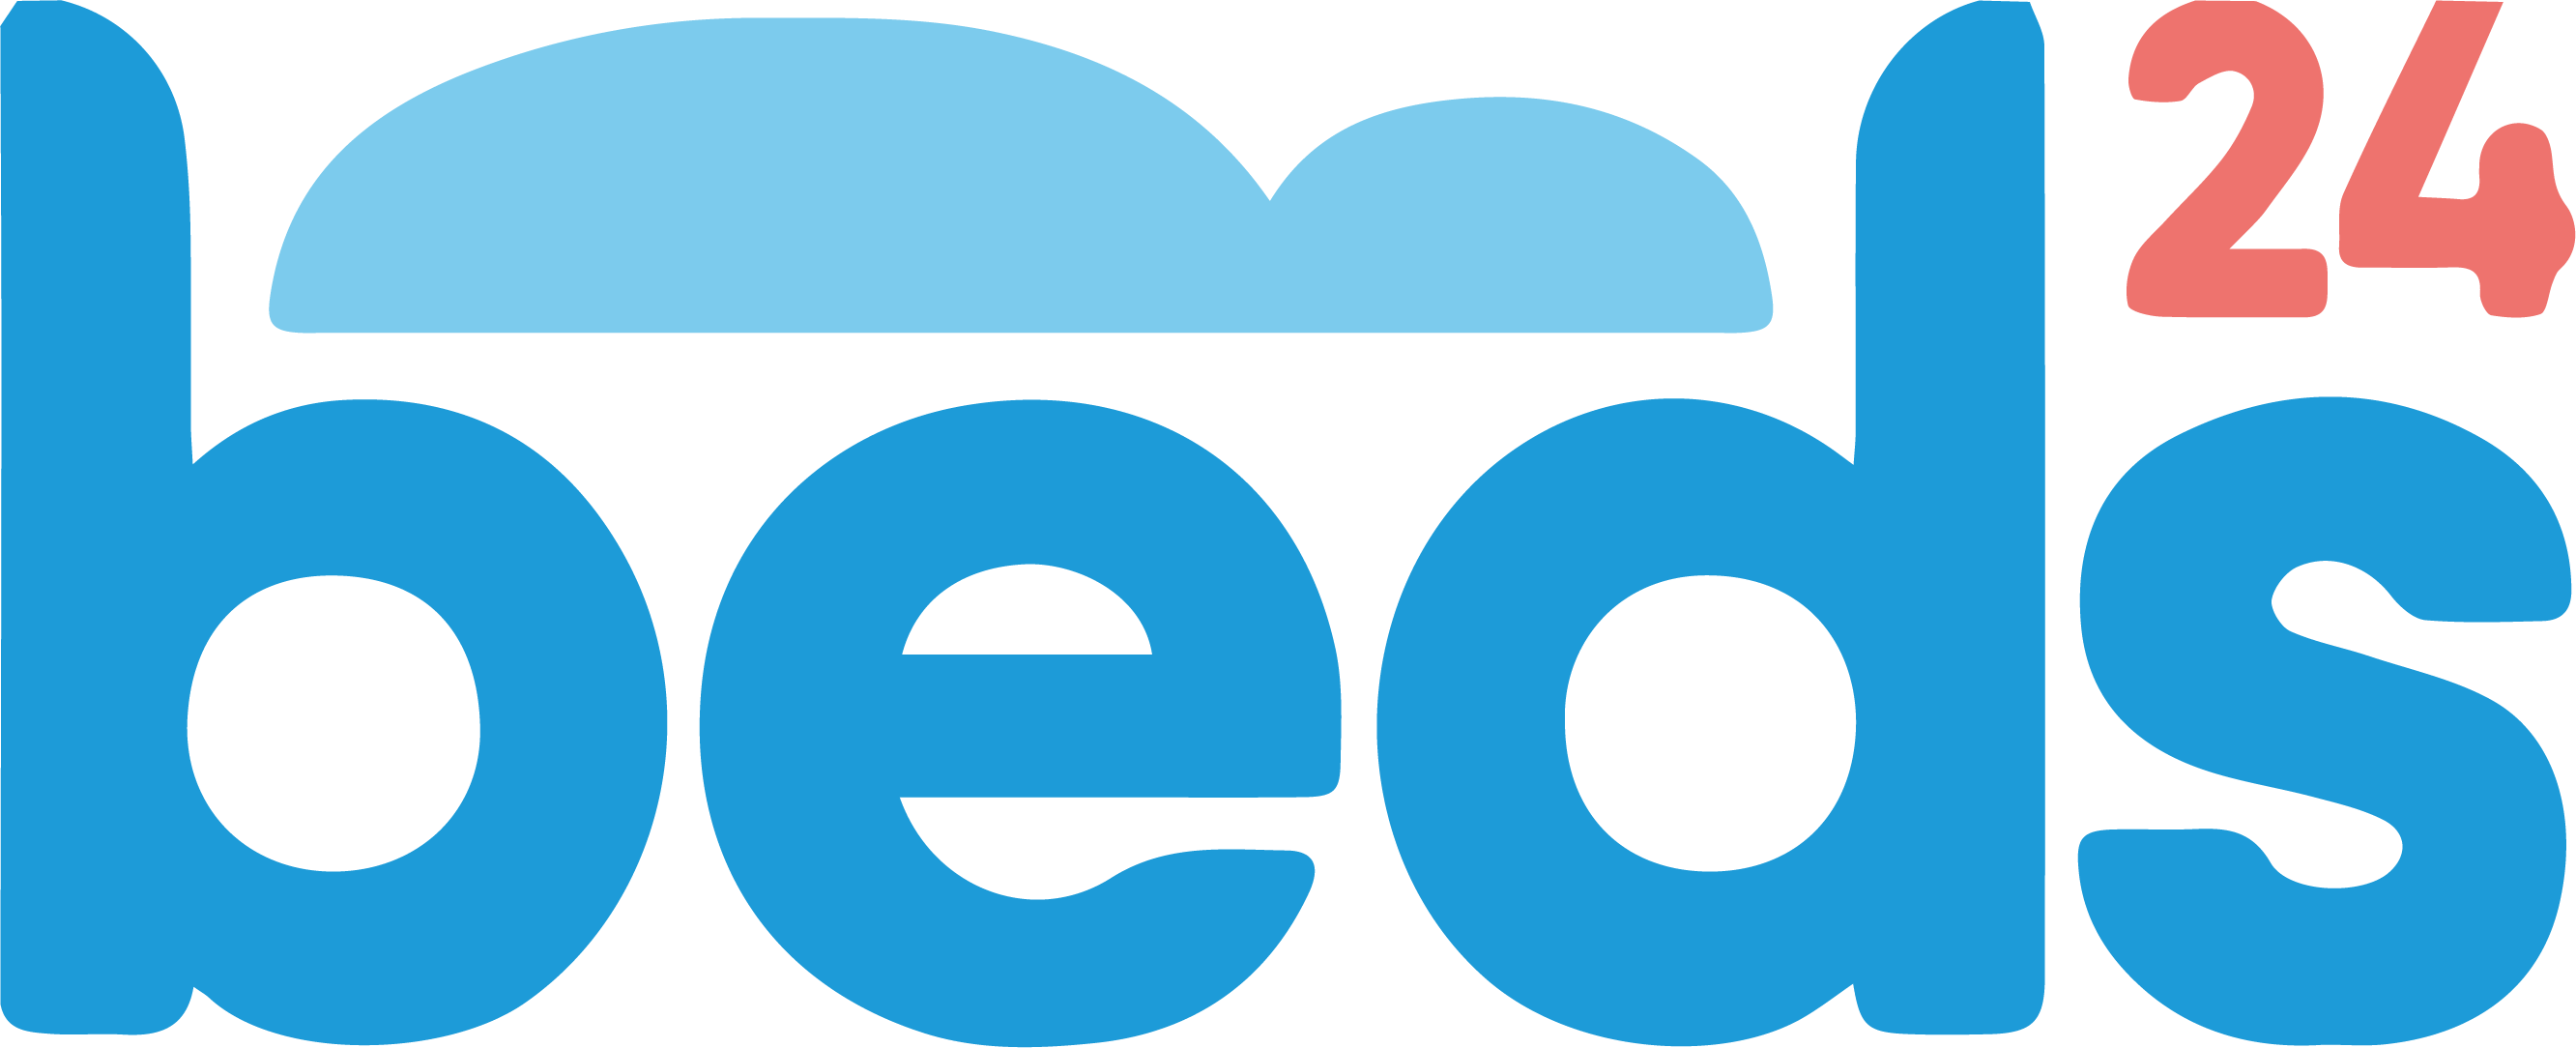 Logo Beds24